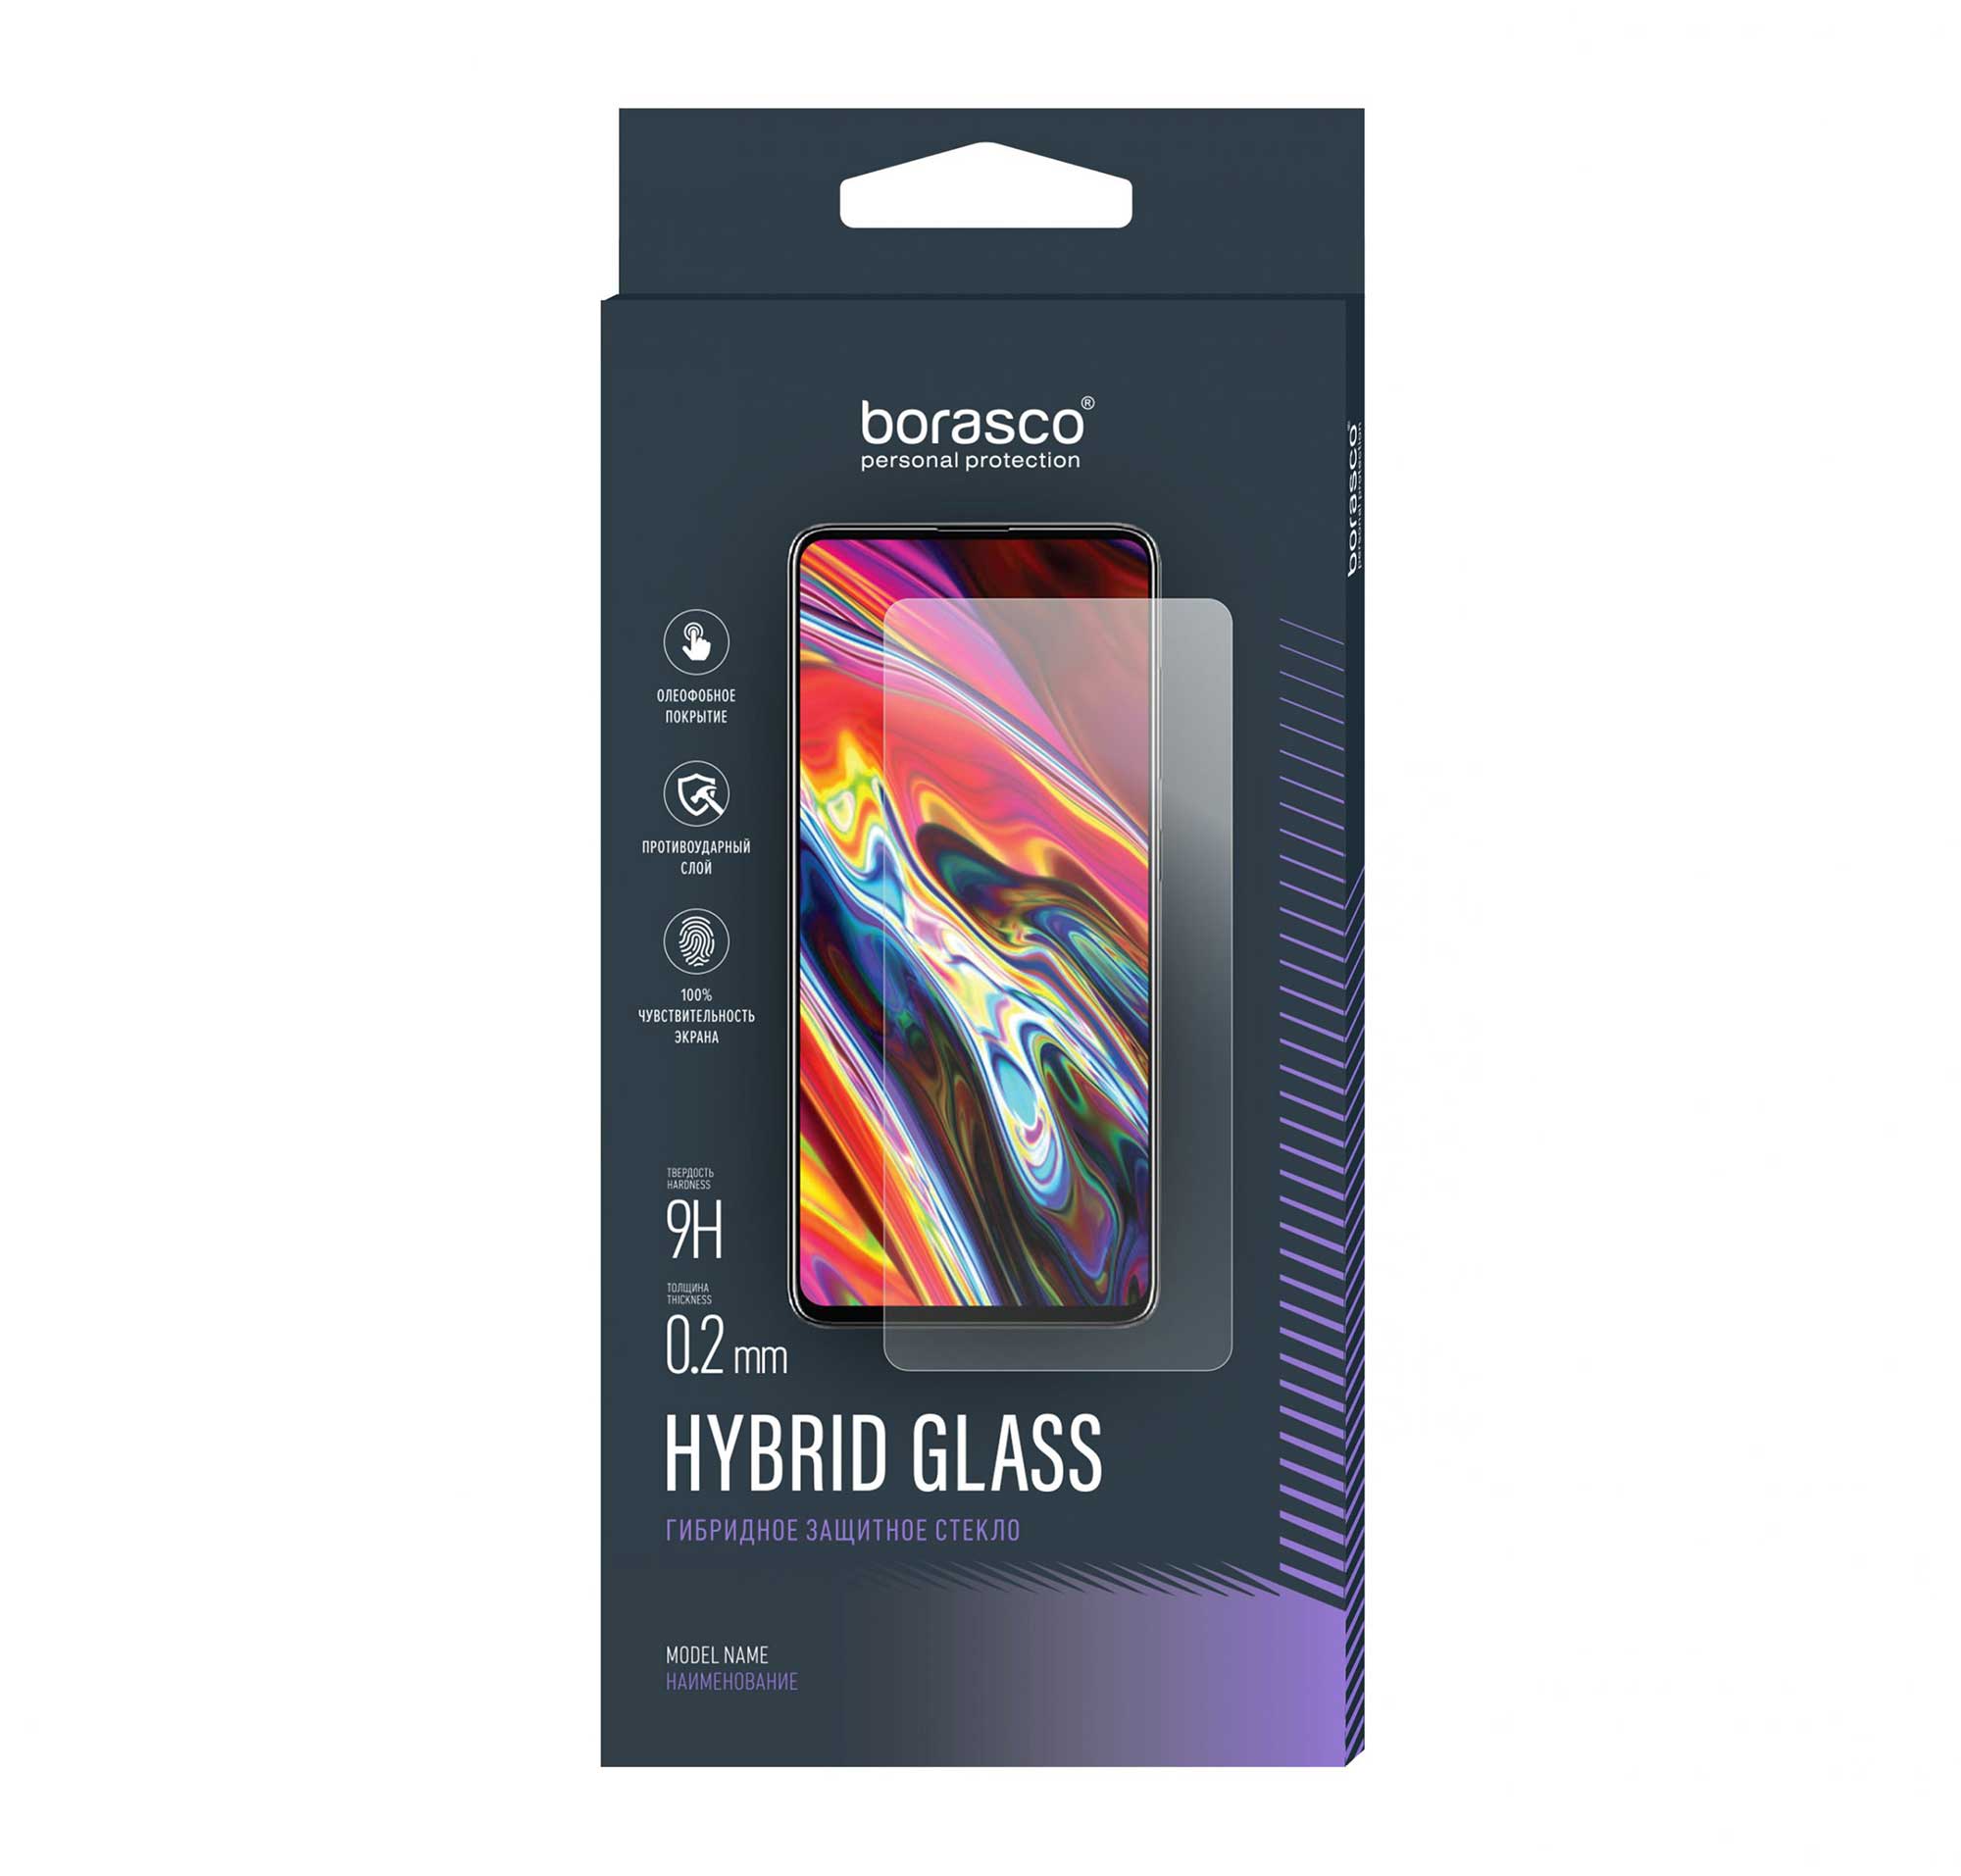 Защитное стекло BoraSCO Hybrid Glass для BQ 5016G Choice/ 5046L Choice LTE защитное стекло для телефона bq 5016g choice bq 5046l choice lte 86184540